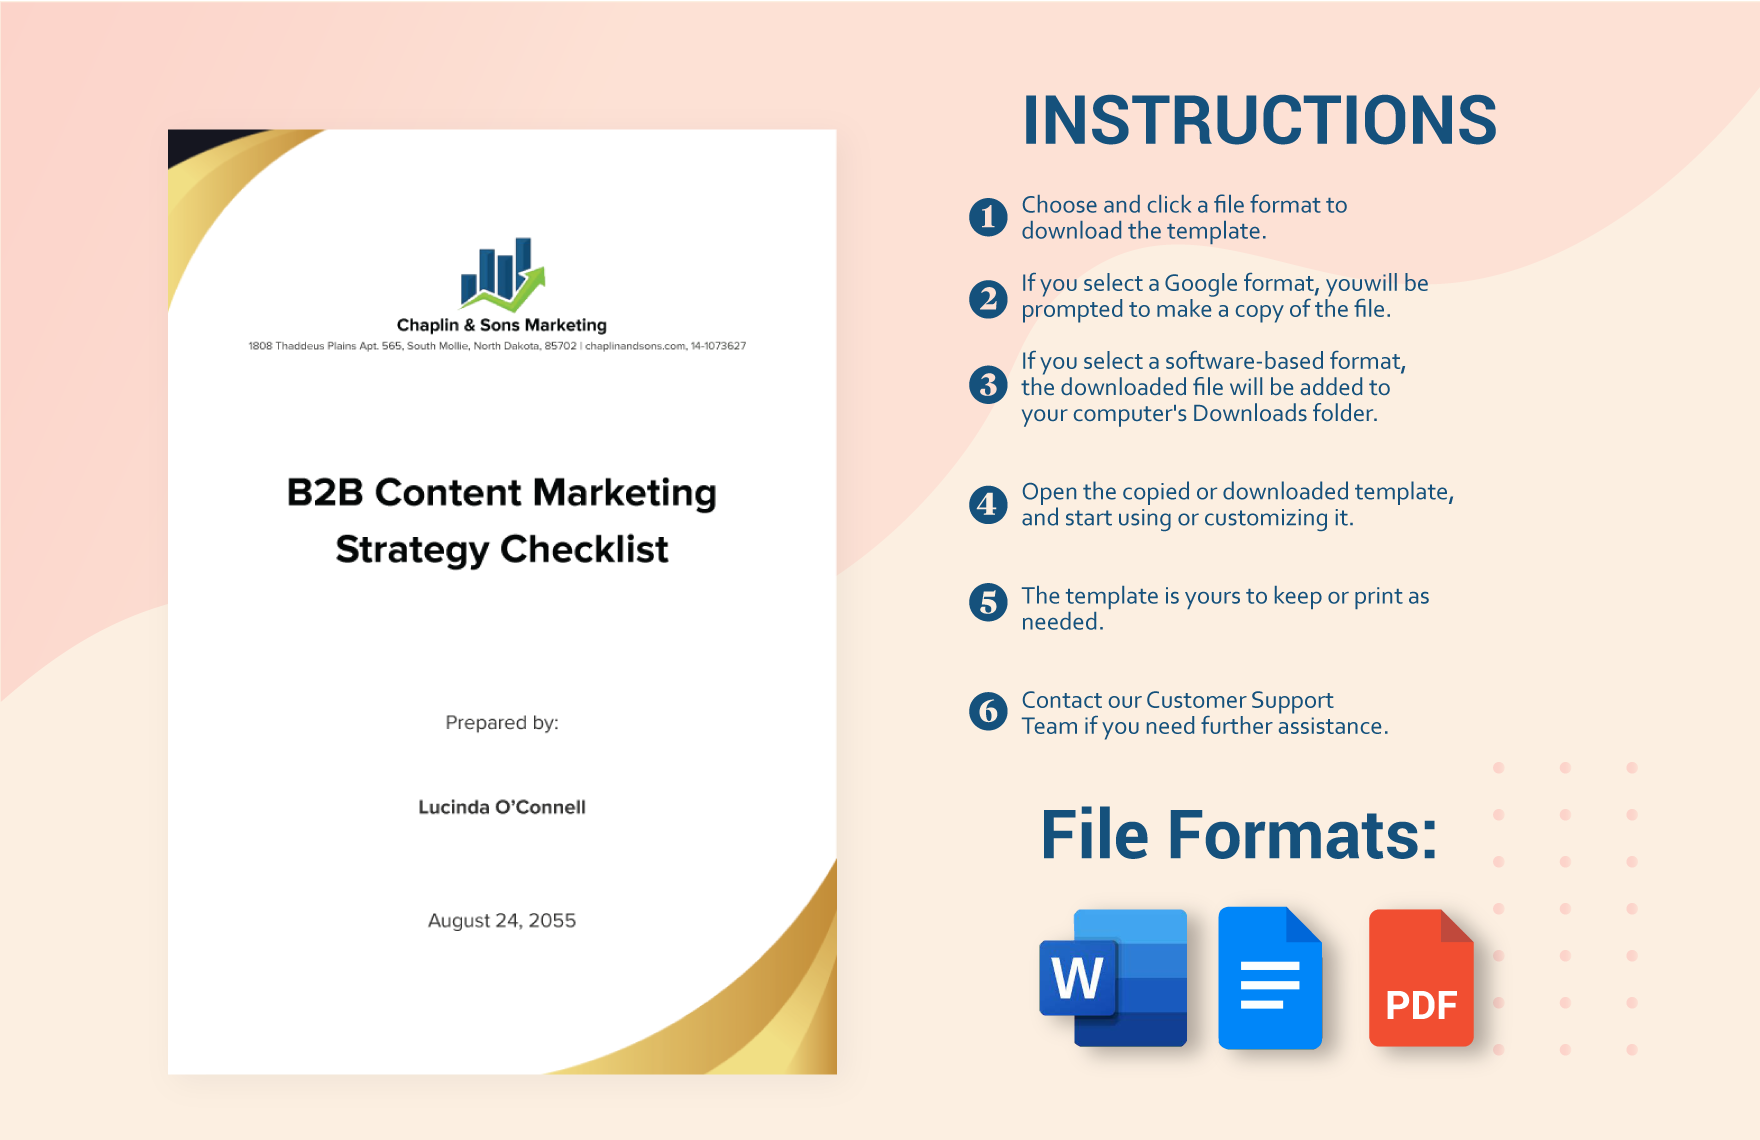 B2B Content Marketing Strategy Checklist Template